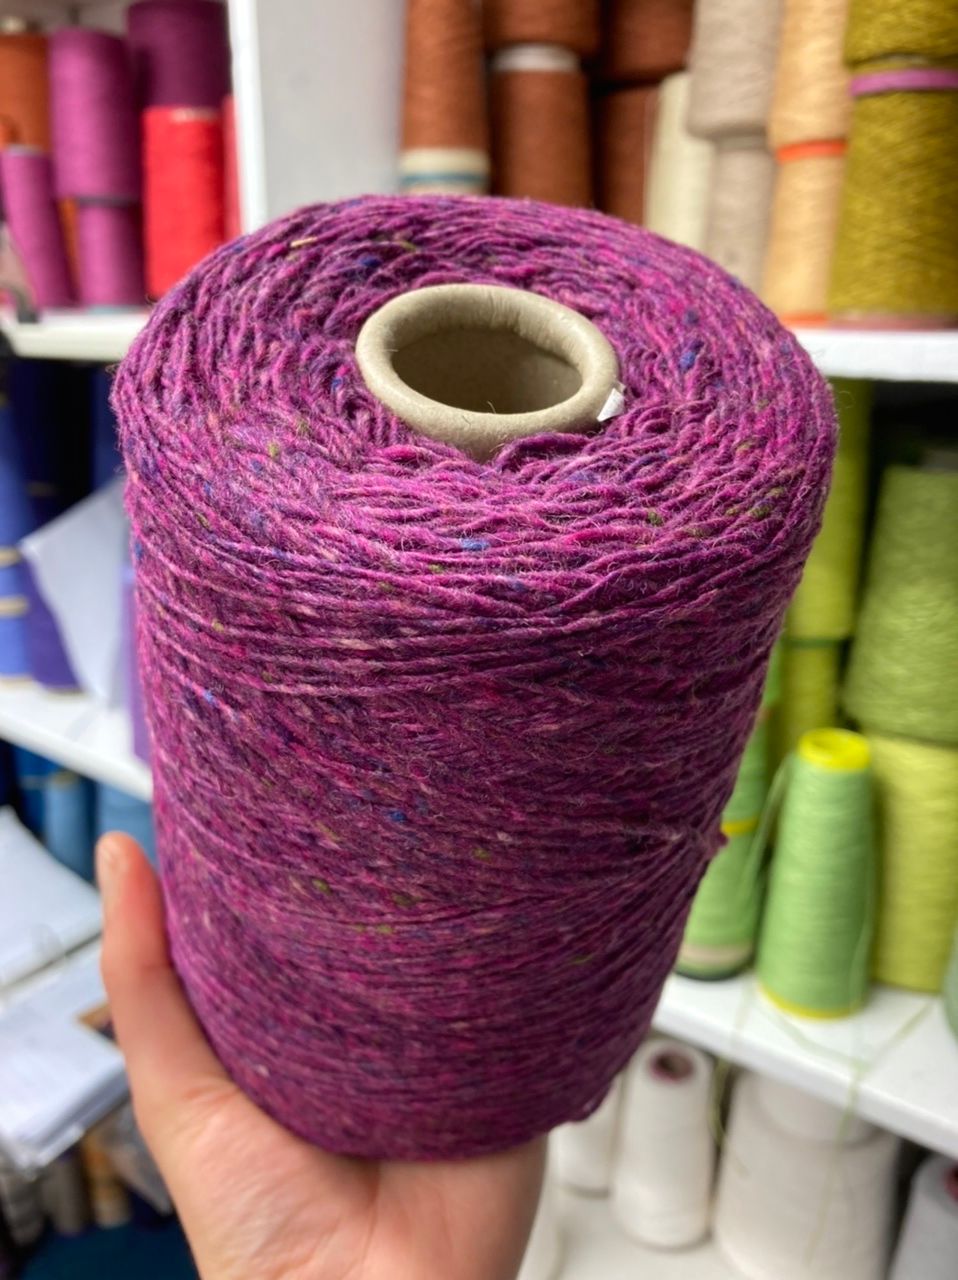 The Yarn Store @ Bill Baber Knitwear